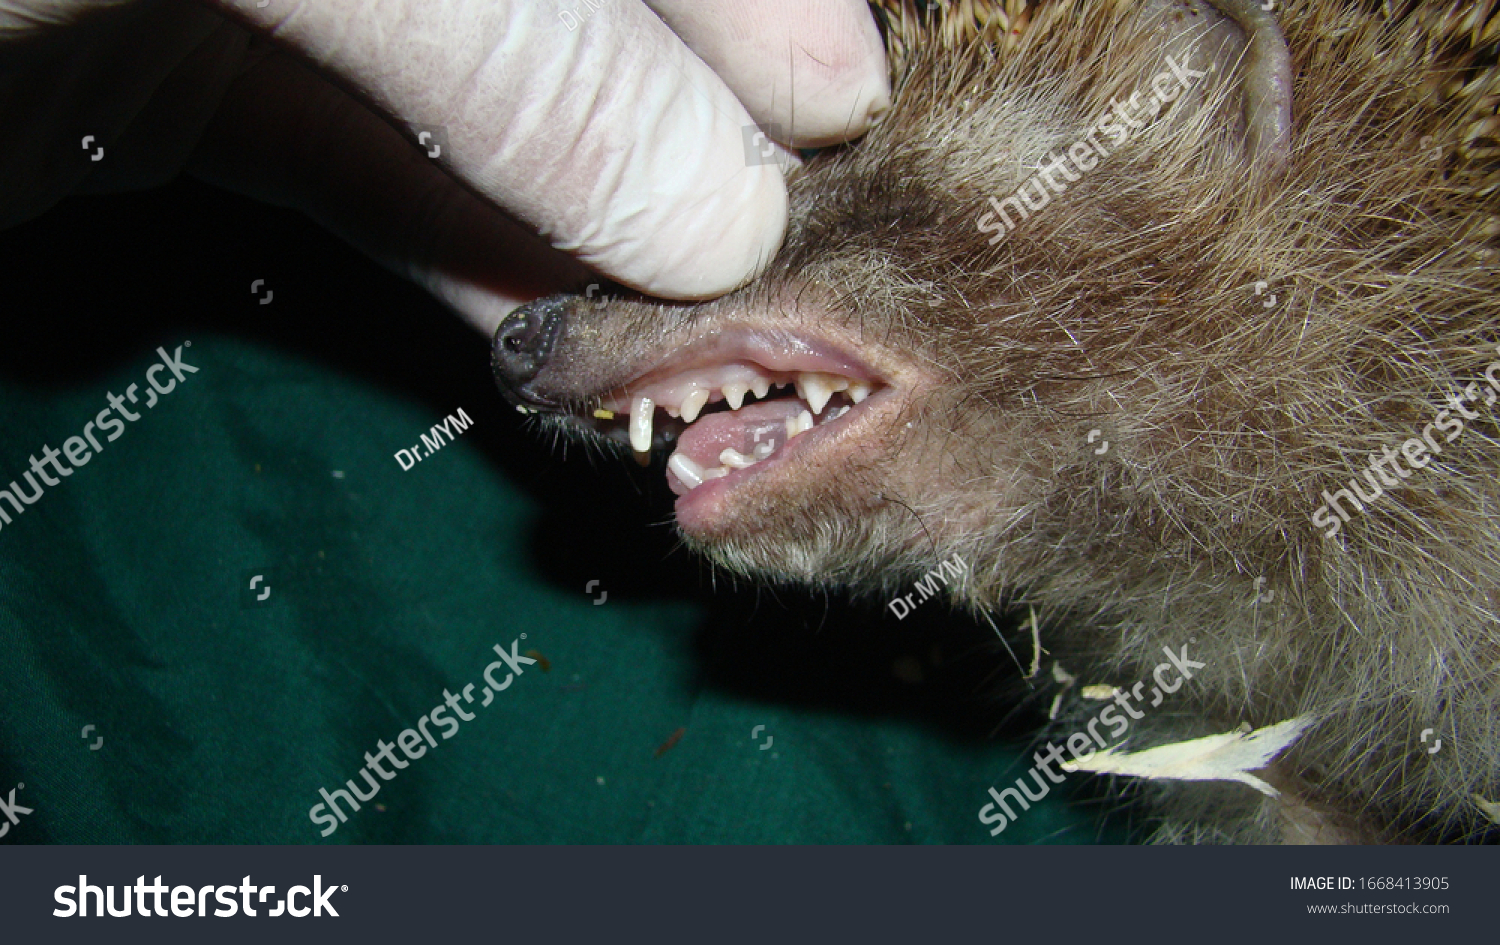 Zdjęcie stockowe "Hedgehog Exotic Veterinarian Examines Hedgehog Mouth" (1668413905) ...